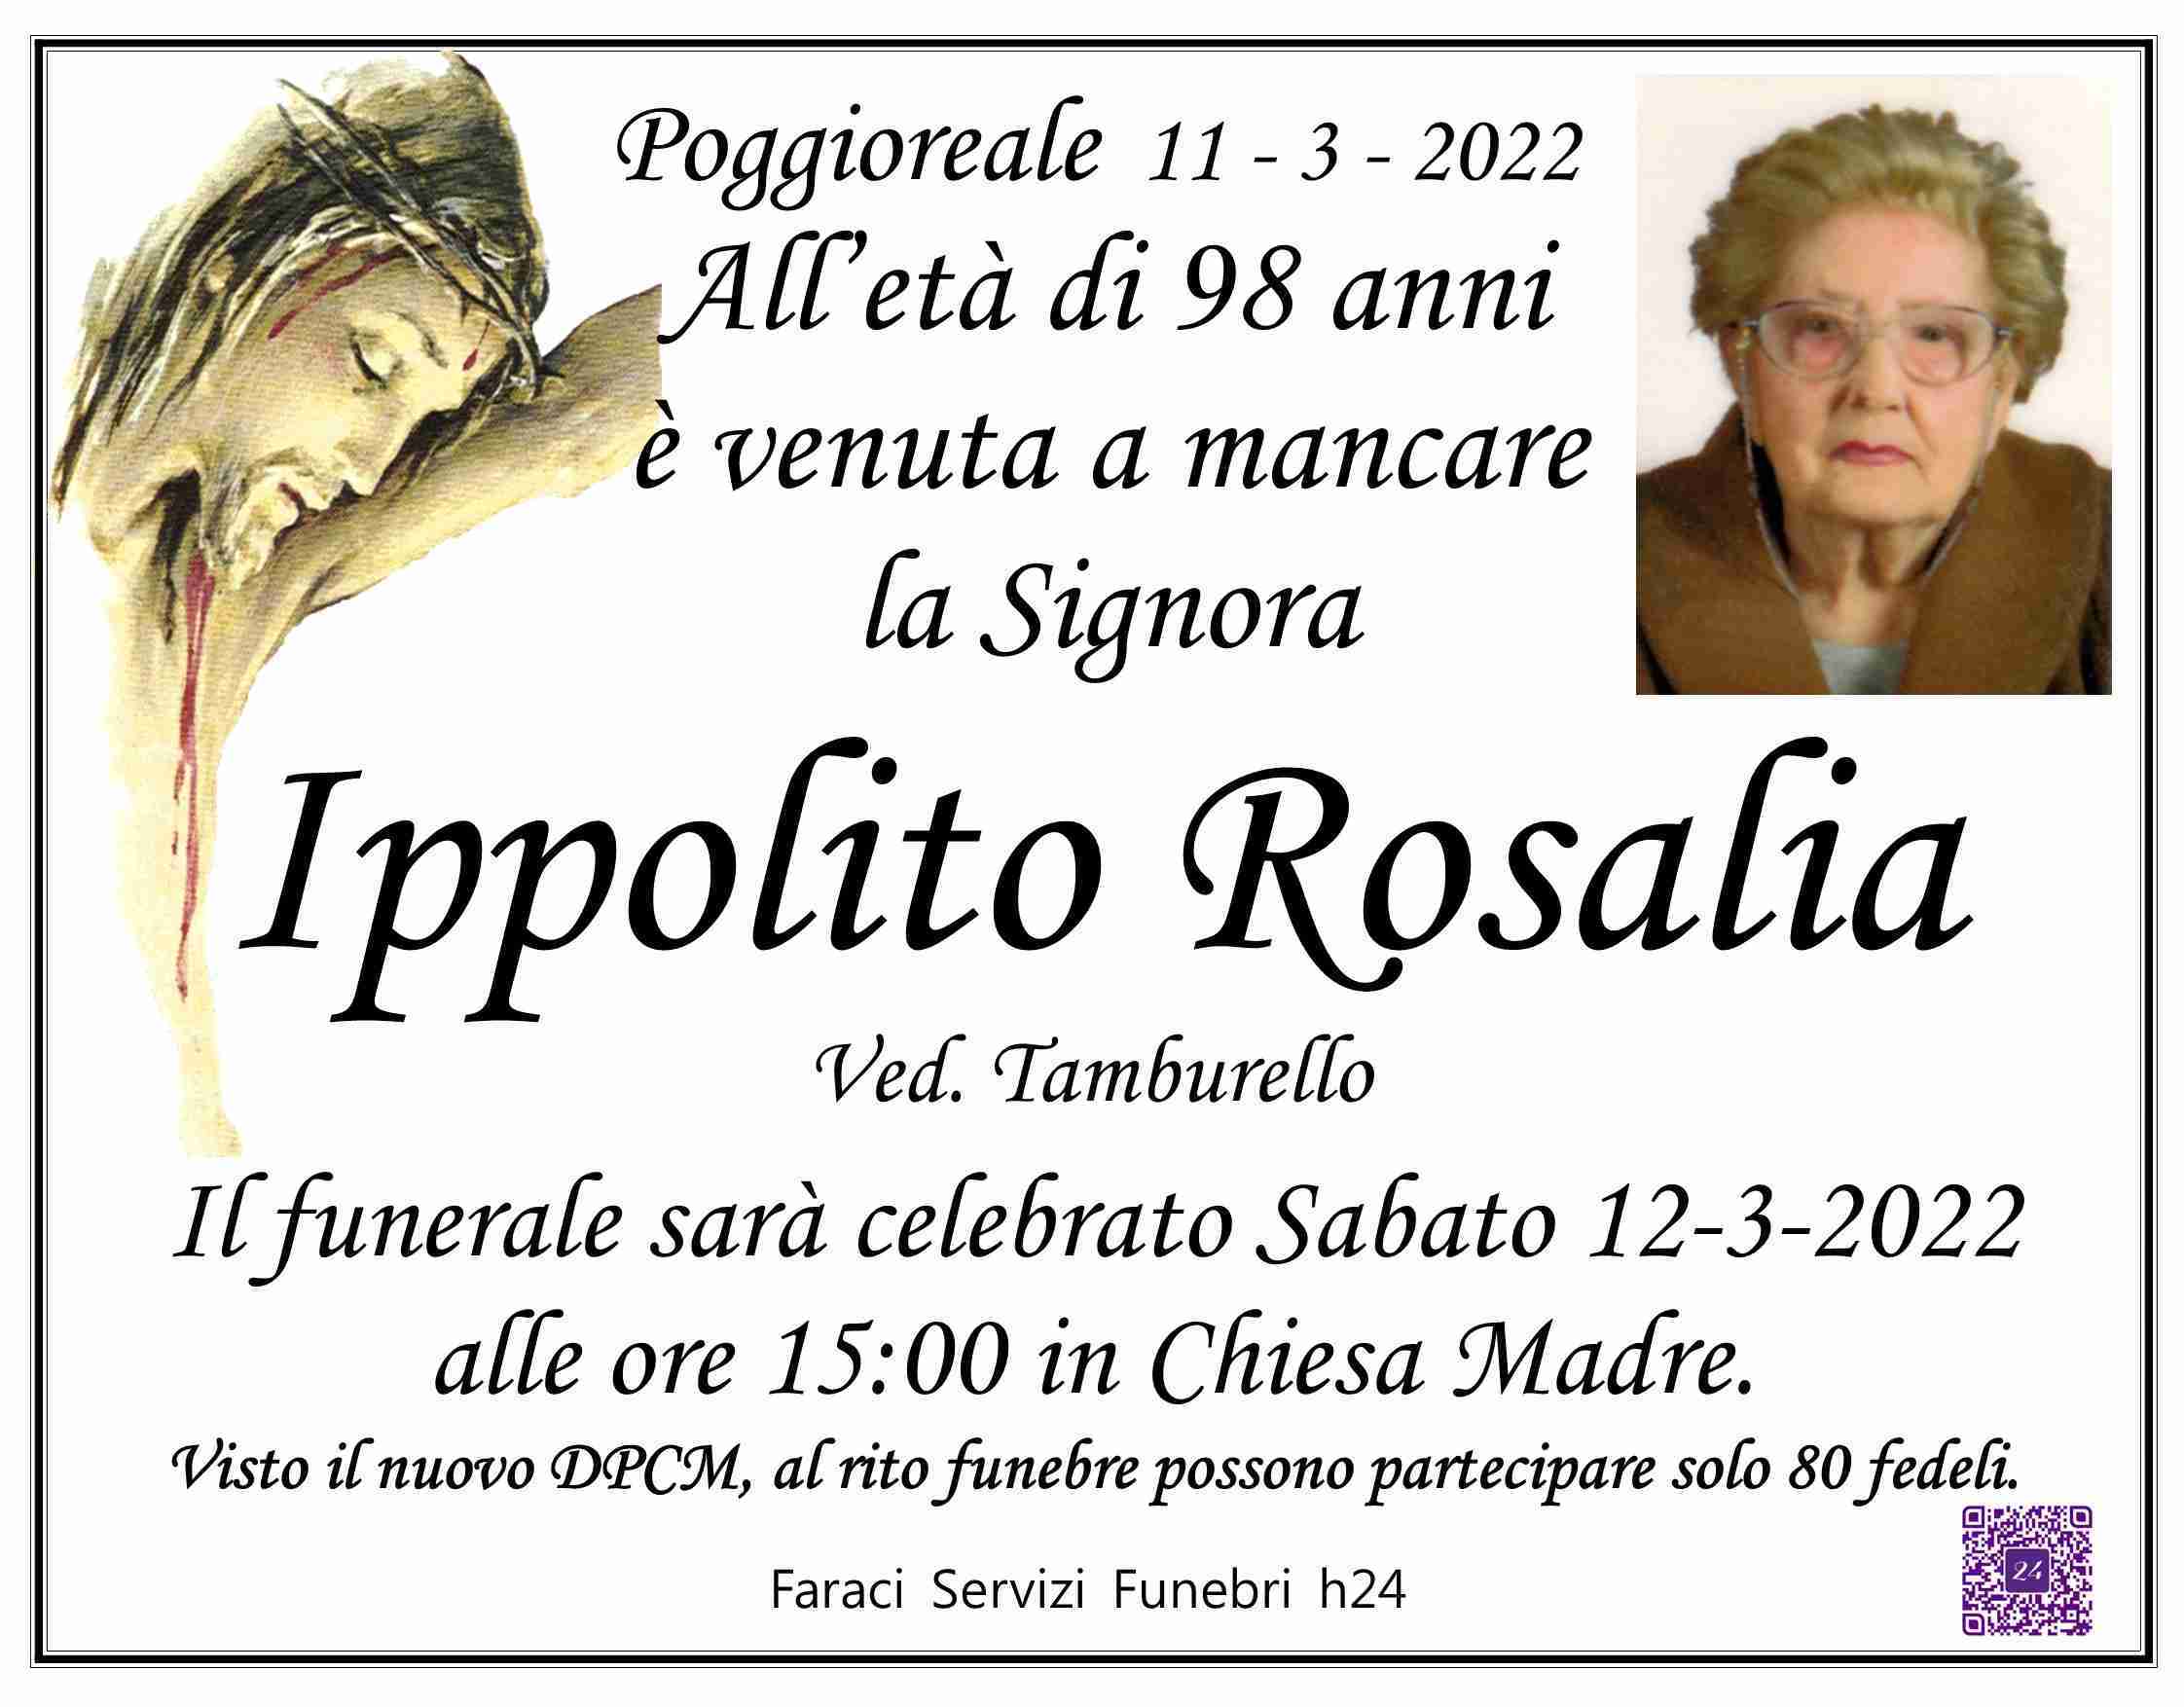 Rosalia Ippolito